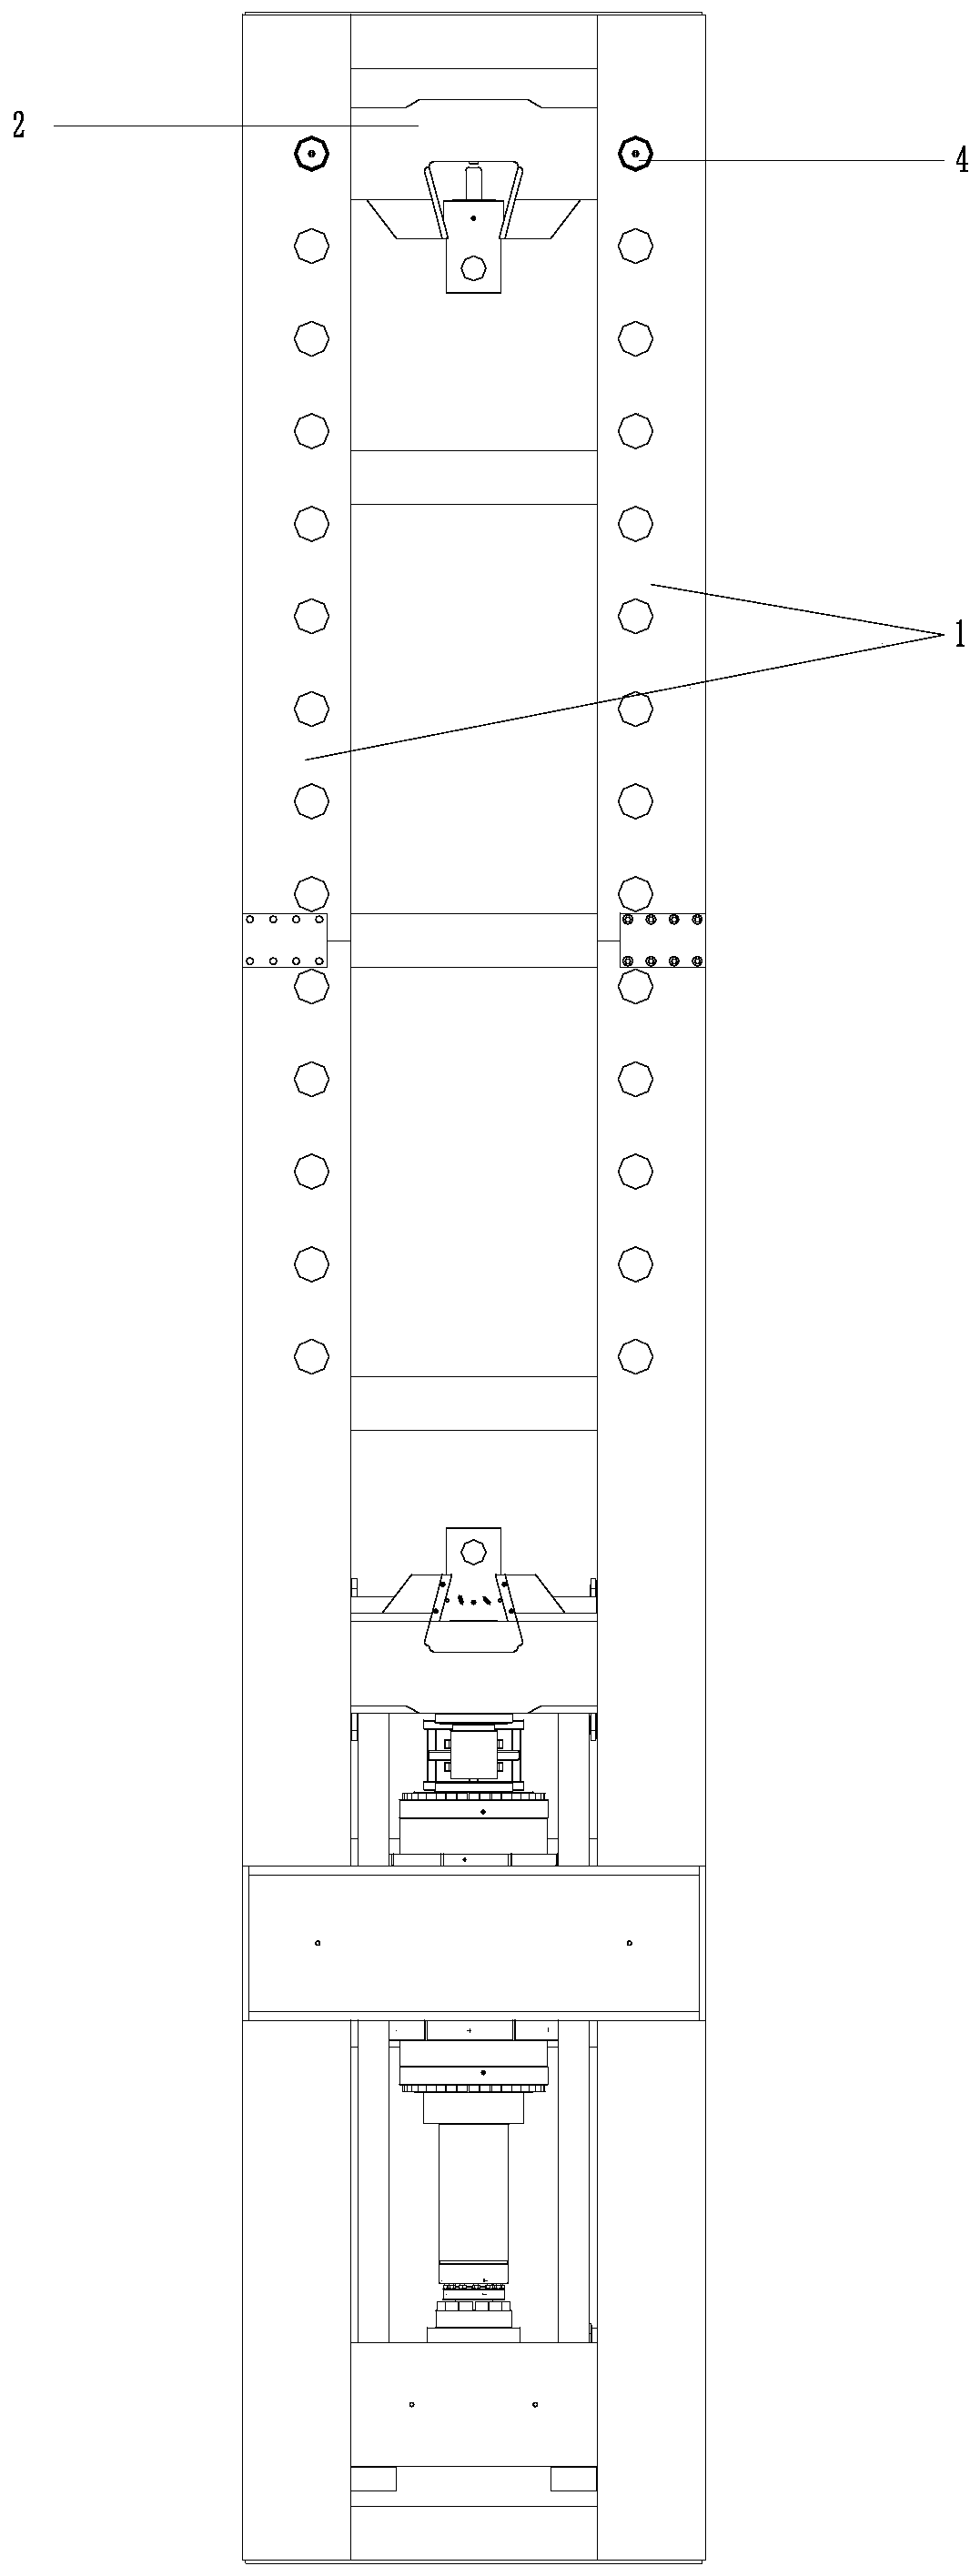 Rotary symmetric plug pin insertion mechanism and horizontal-type tension test machine